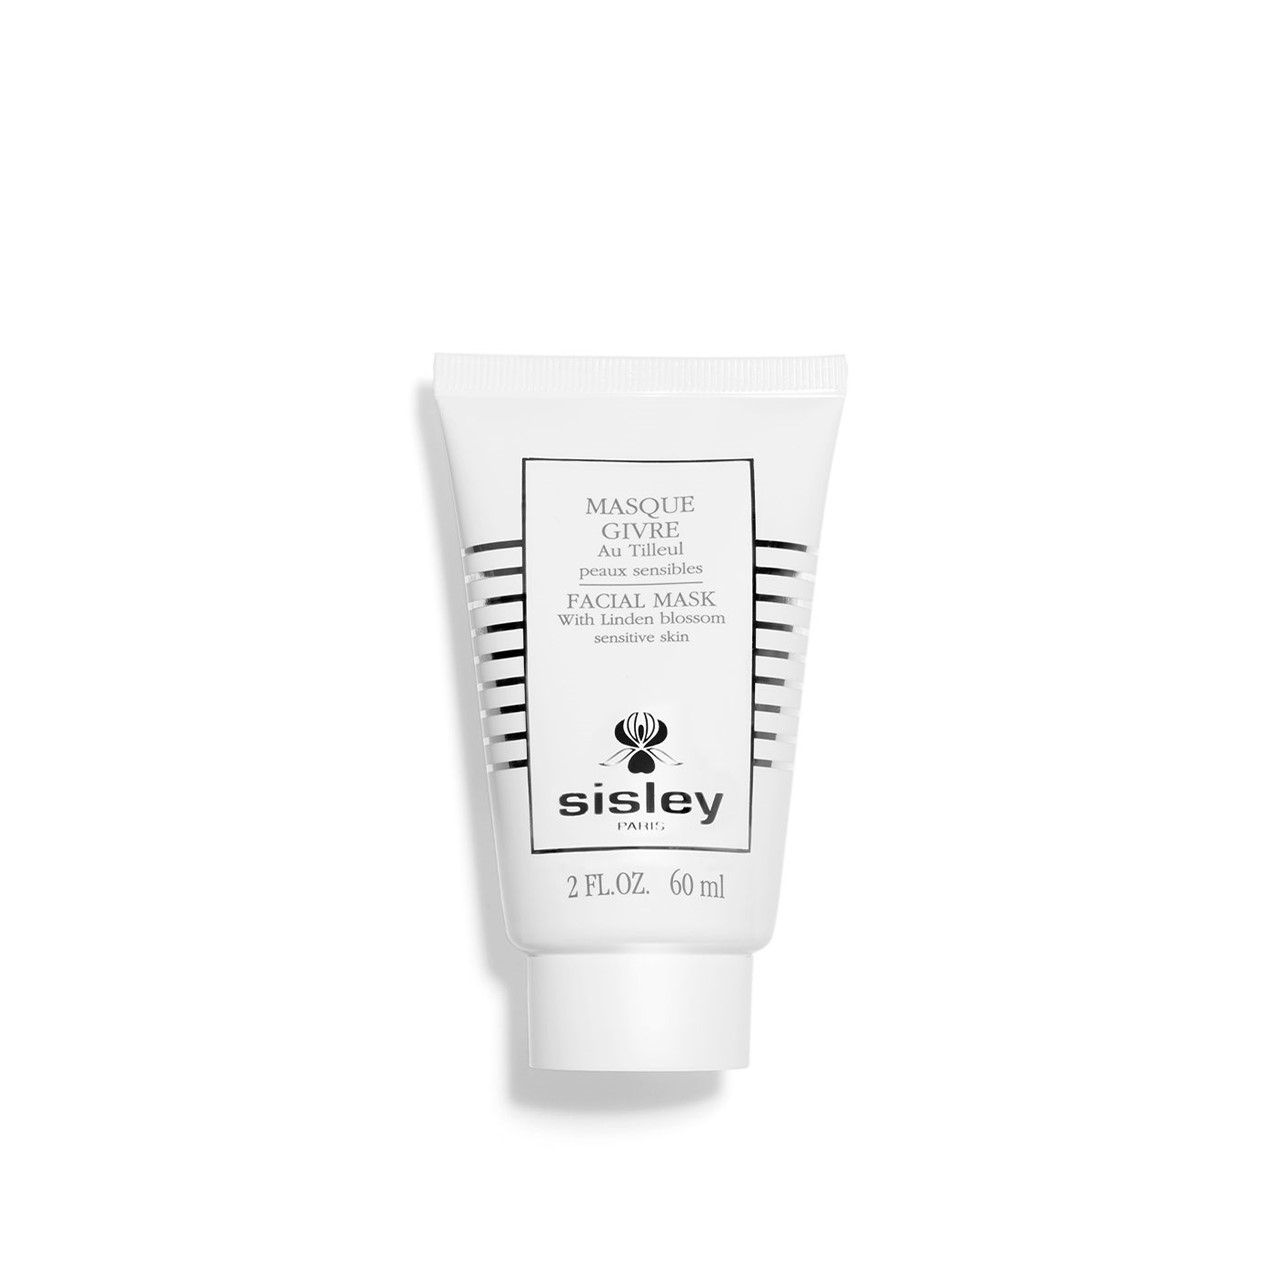 Sisley Paris Facial Mask With Linden Blossom Sensitive Skin 60ml (2 fl oz)